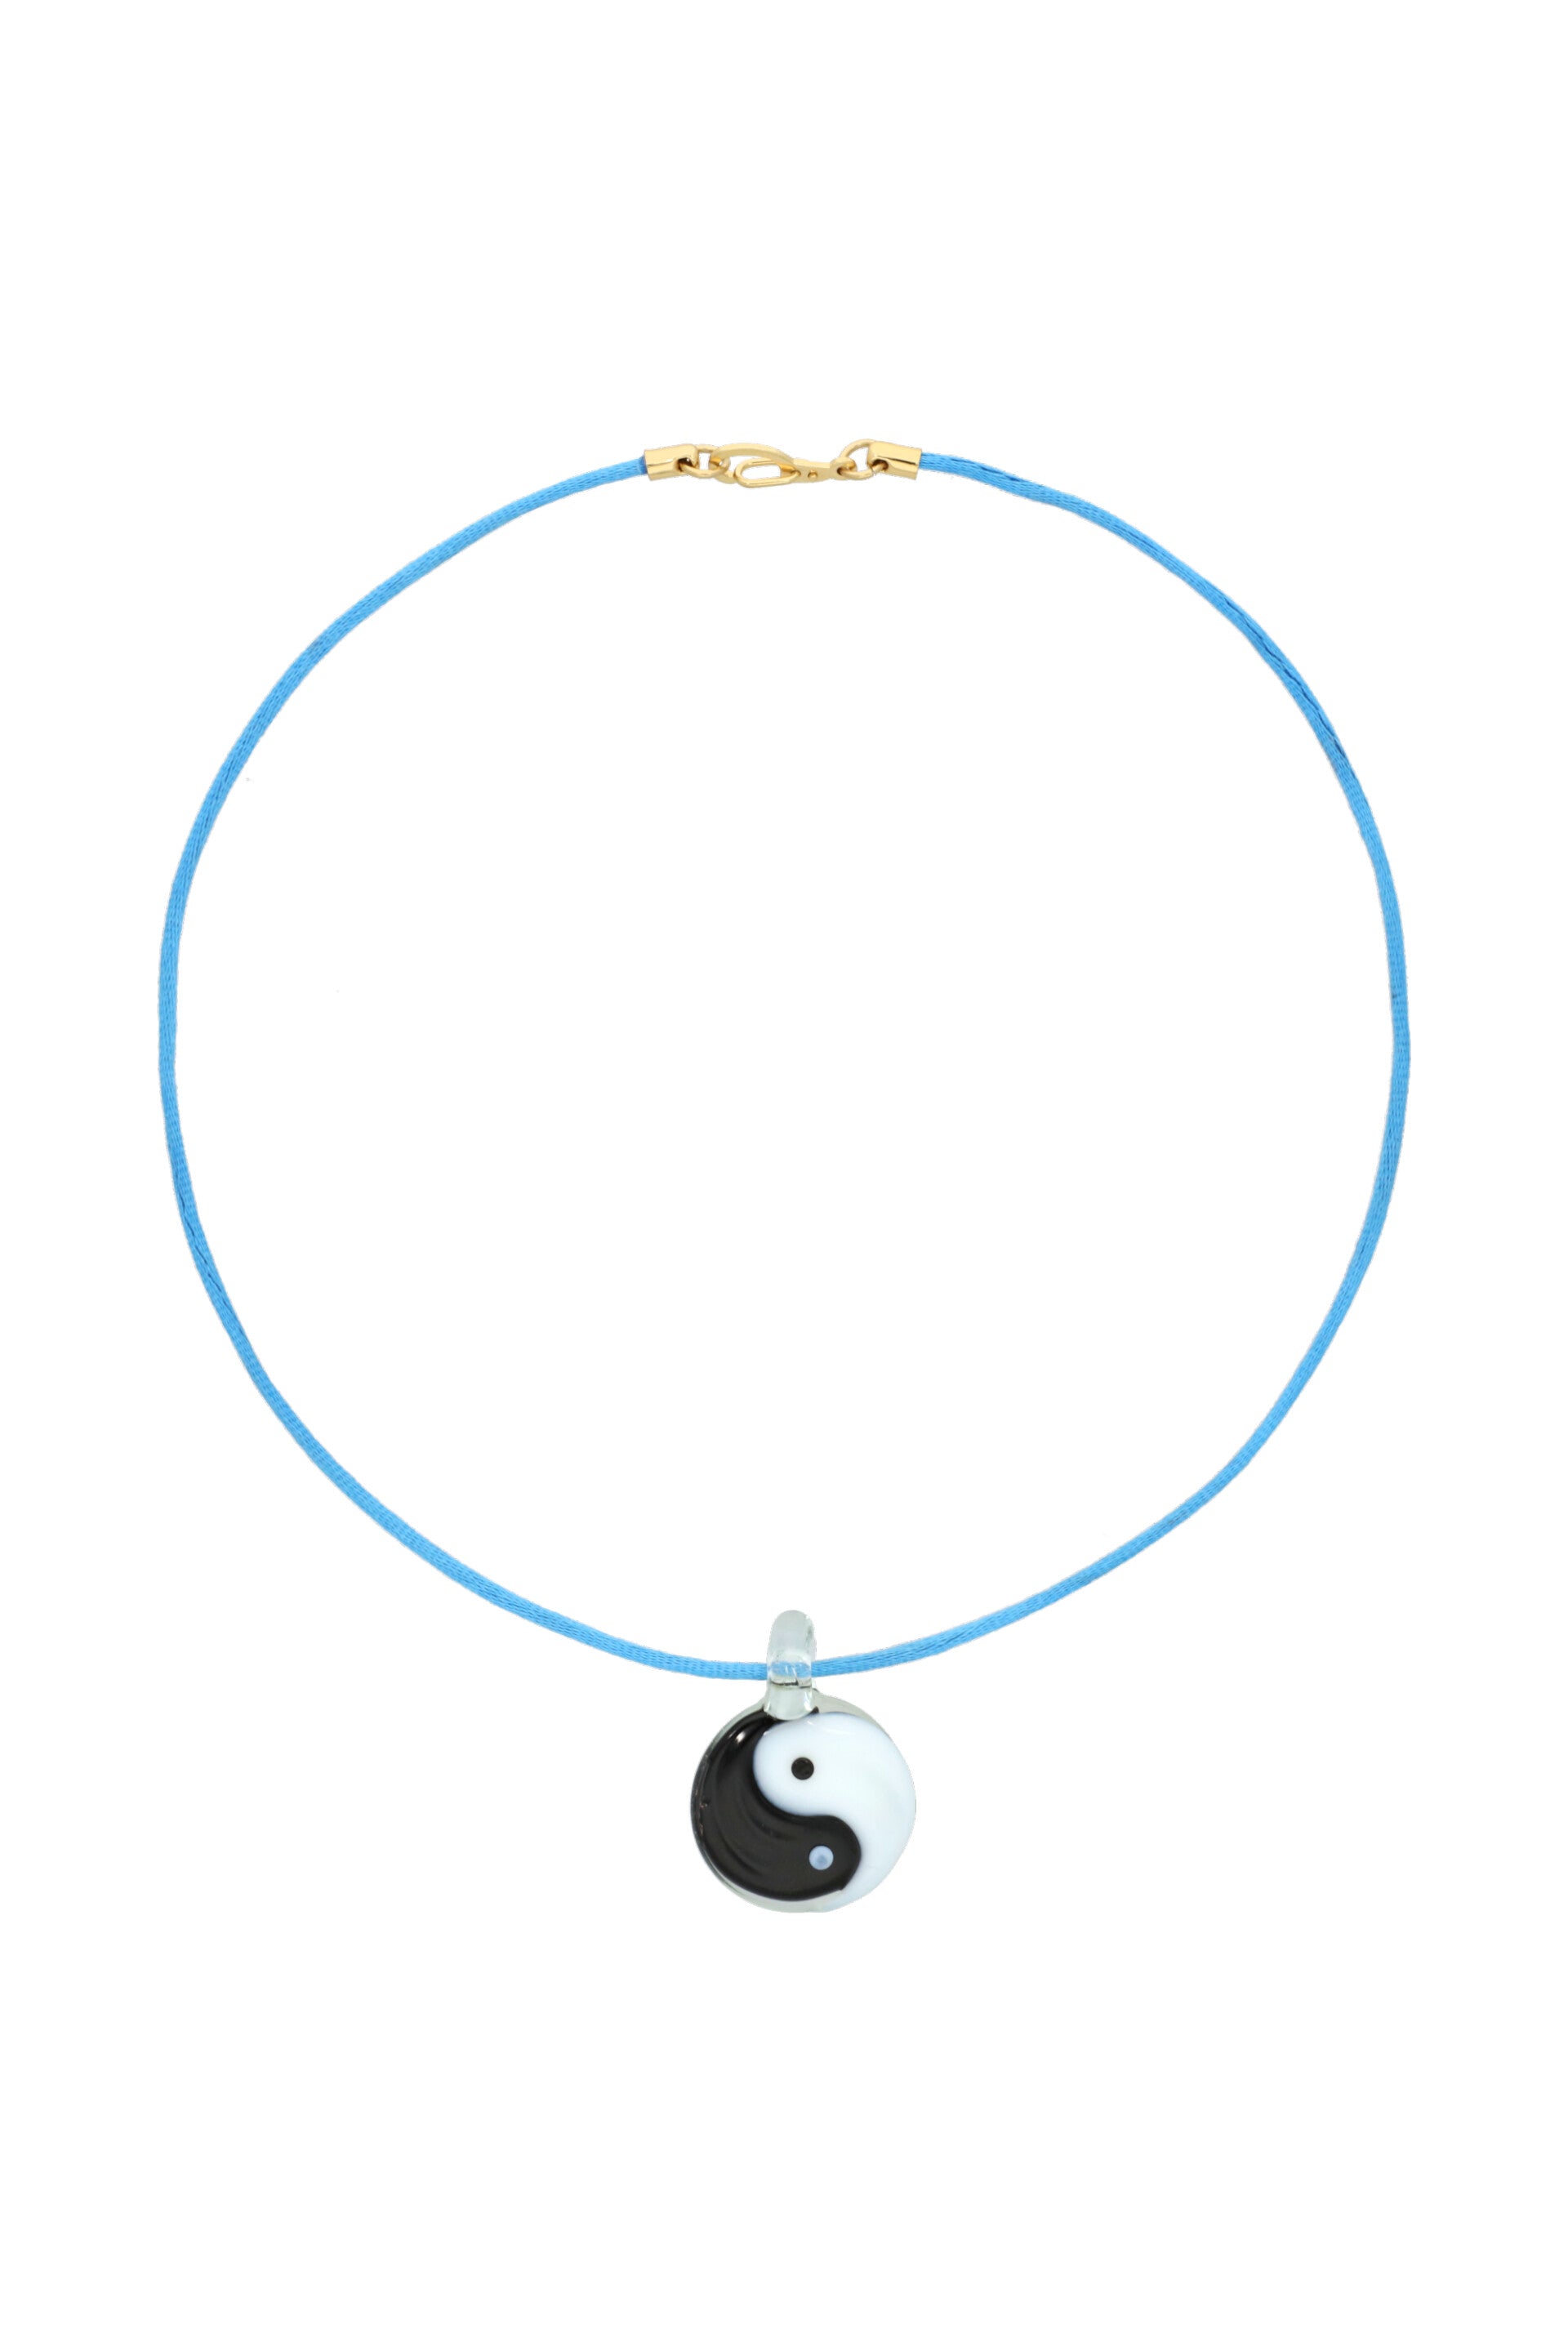 Ying yang necklace